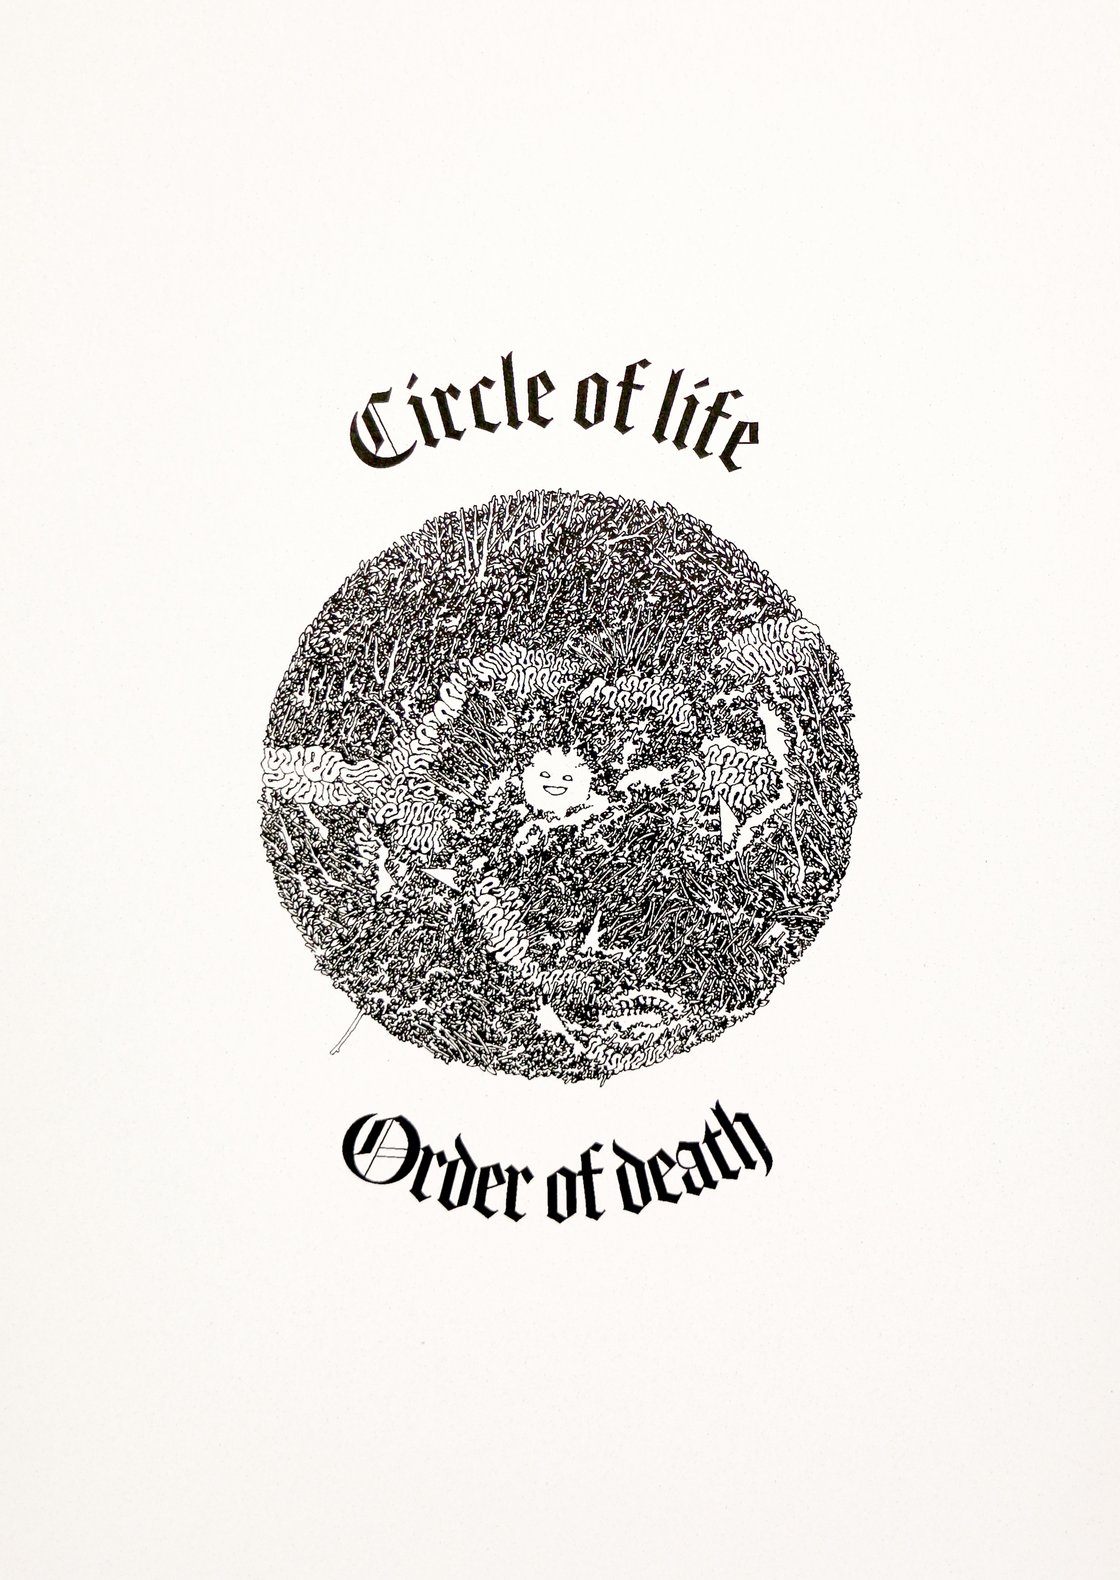 Image of Bartosz Zaskórski "Circle of Life, Order of Death" (selfisz)